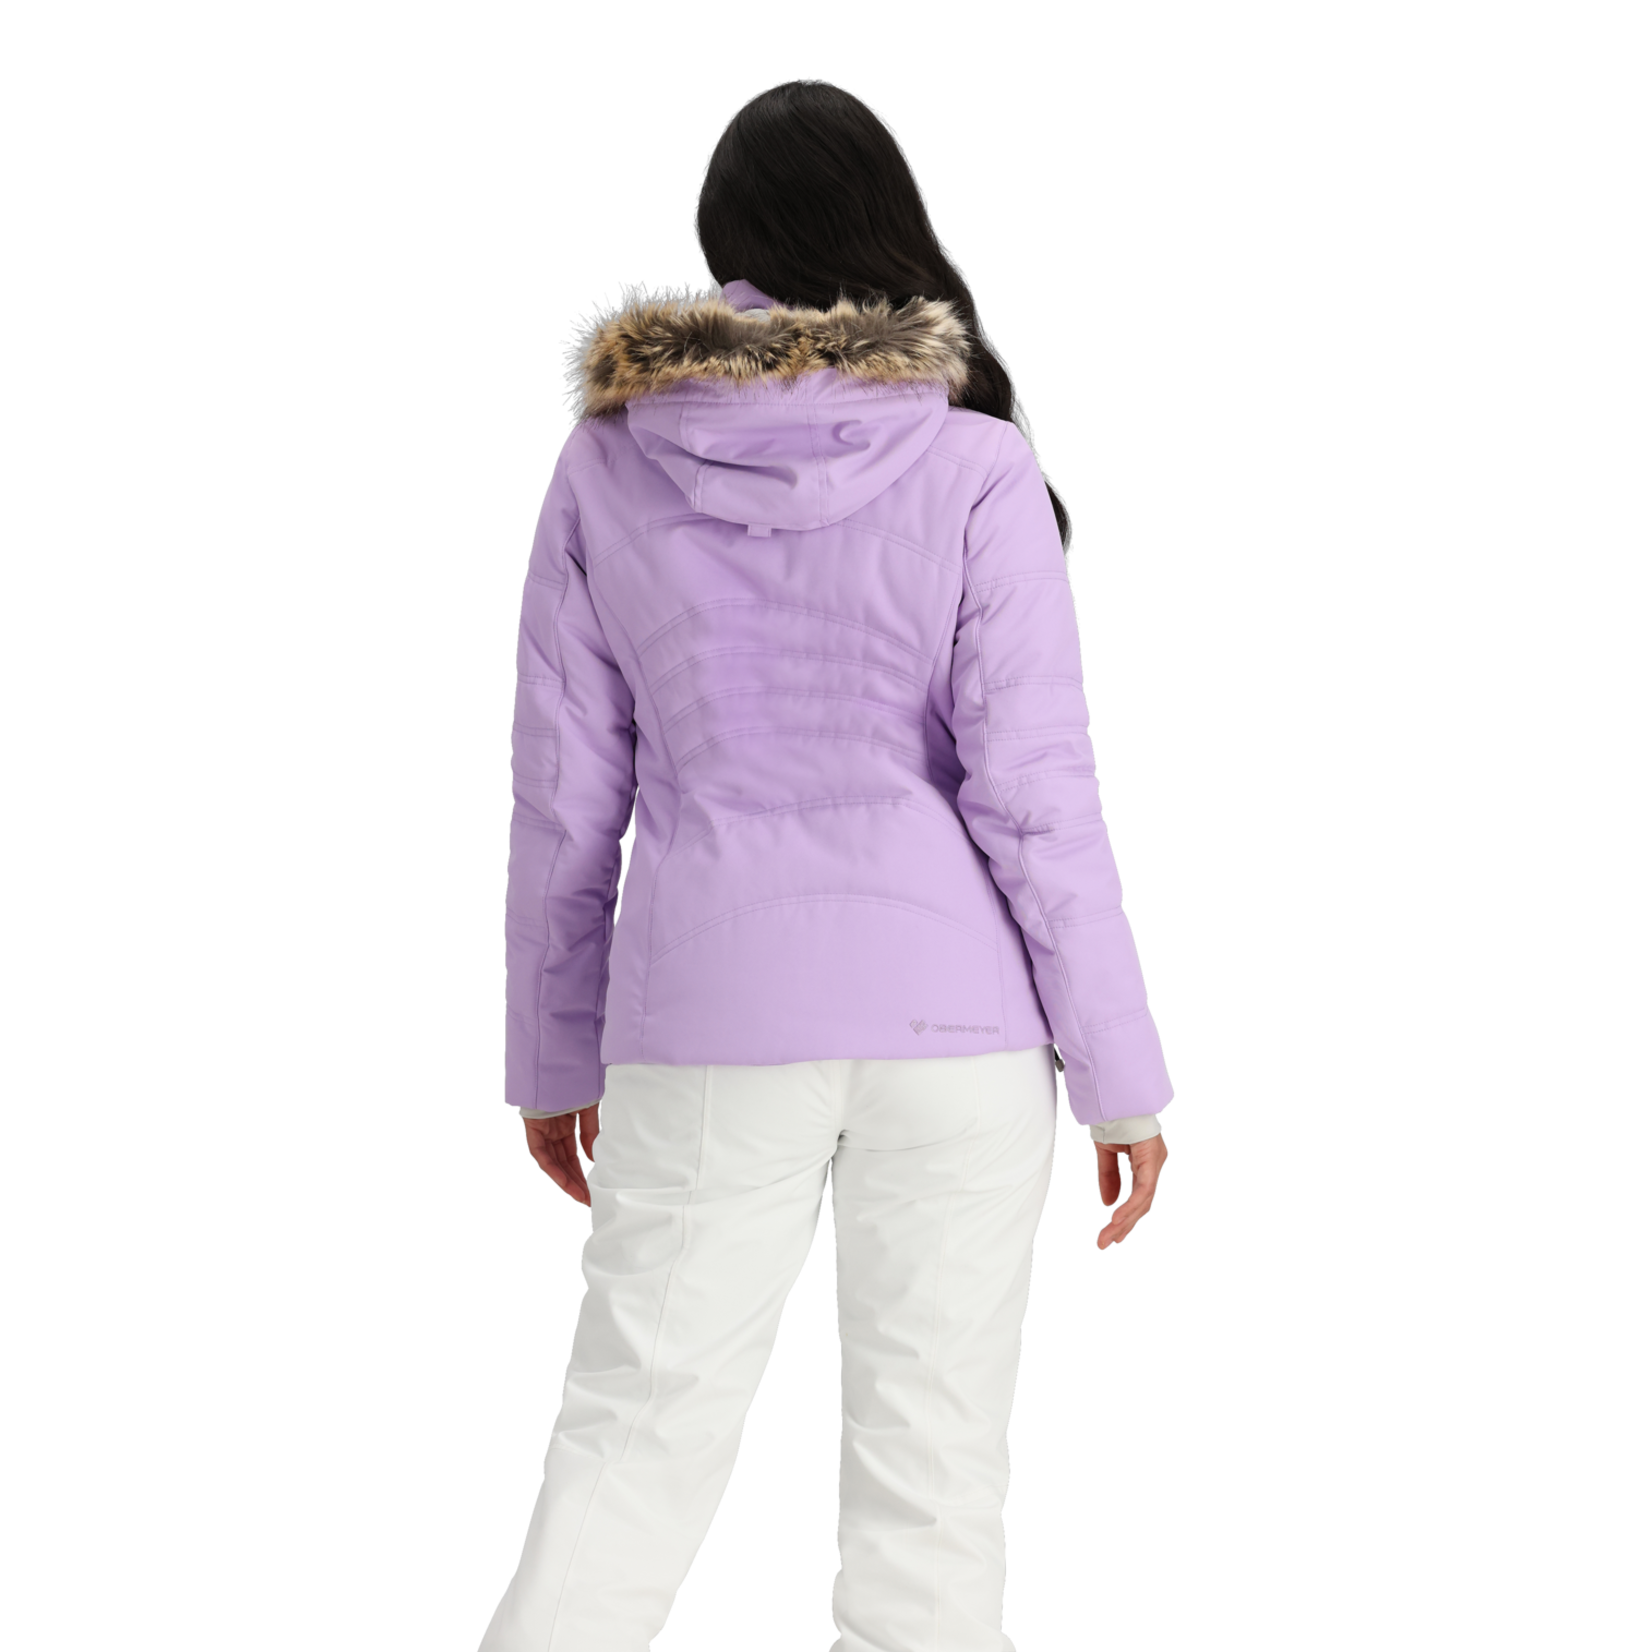 Obermeyer Women's Tuscany II Jacket for Sale - Ski Shack - Ski Shack